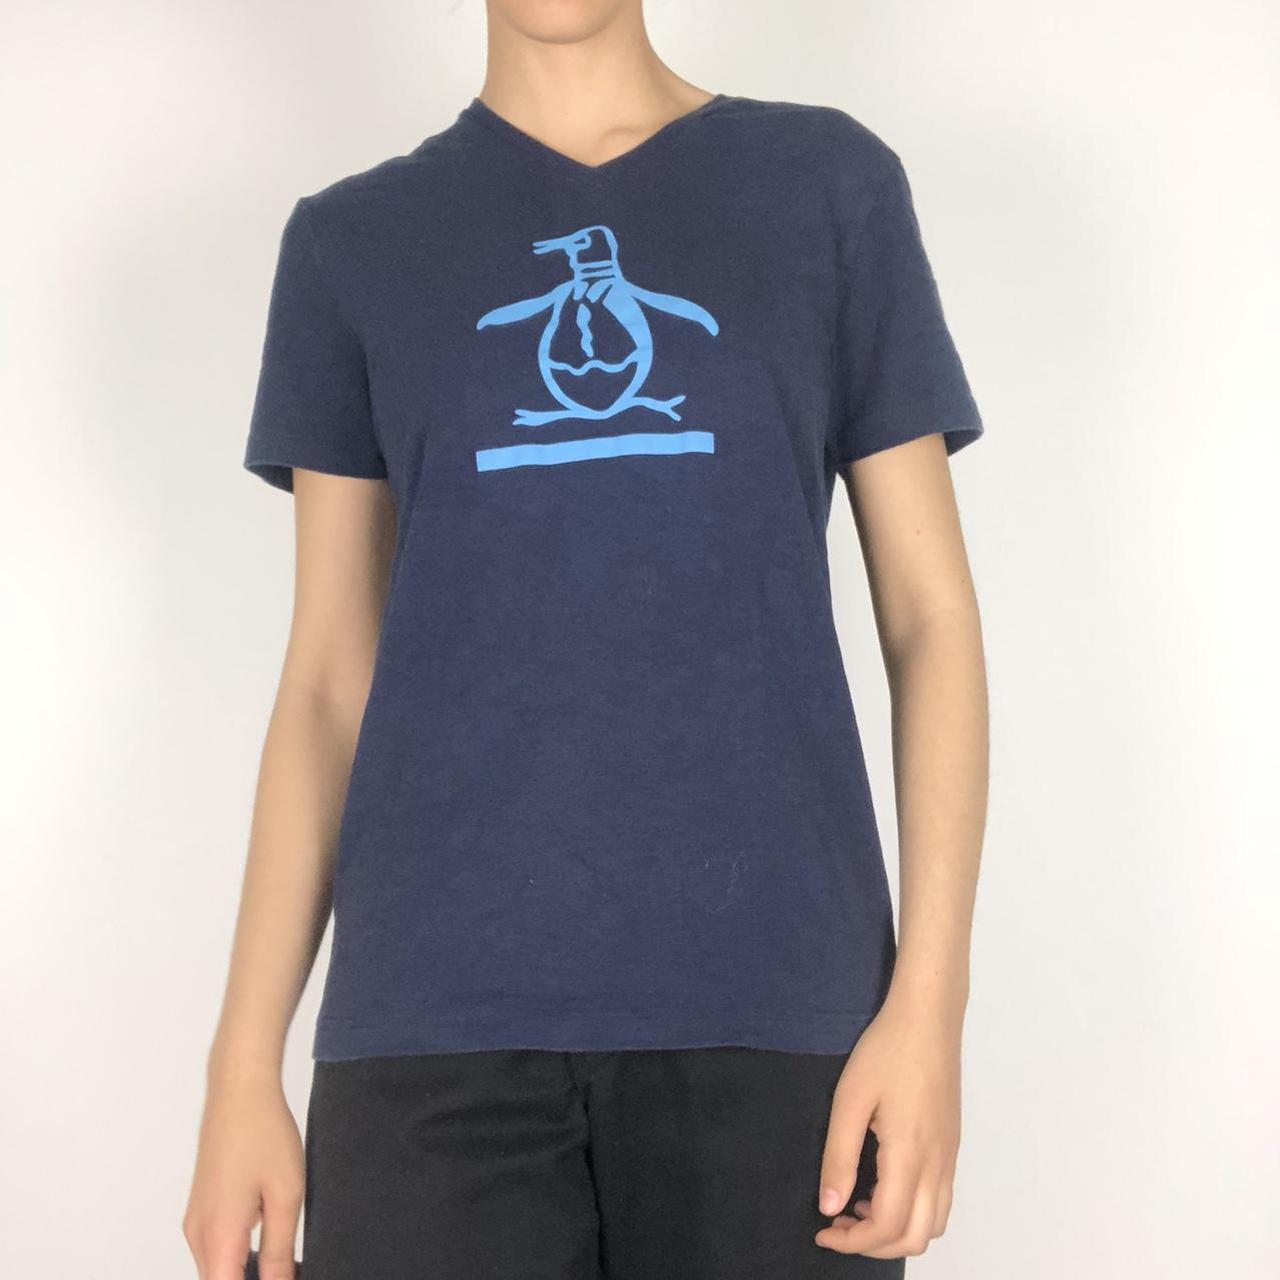 Product Image 1 - Navy blue original penguin shirt

Form